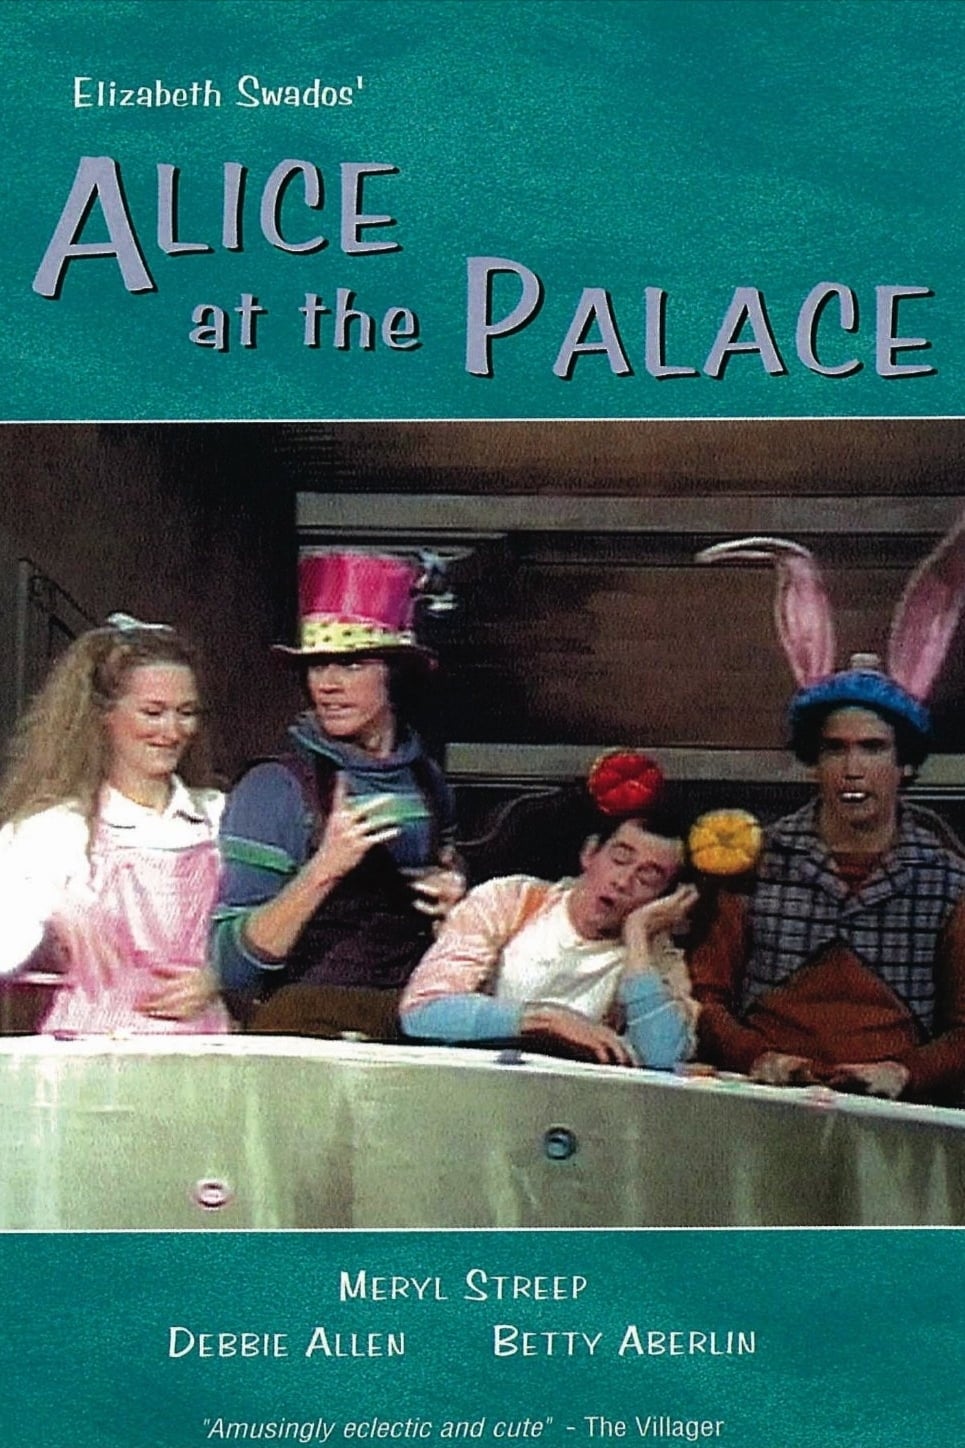 Plakat von "Alice at the Palace"